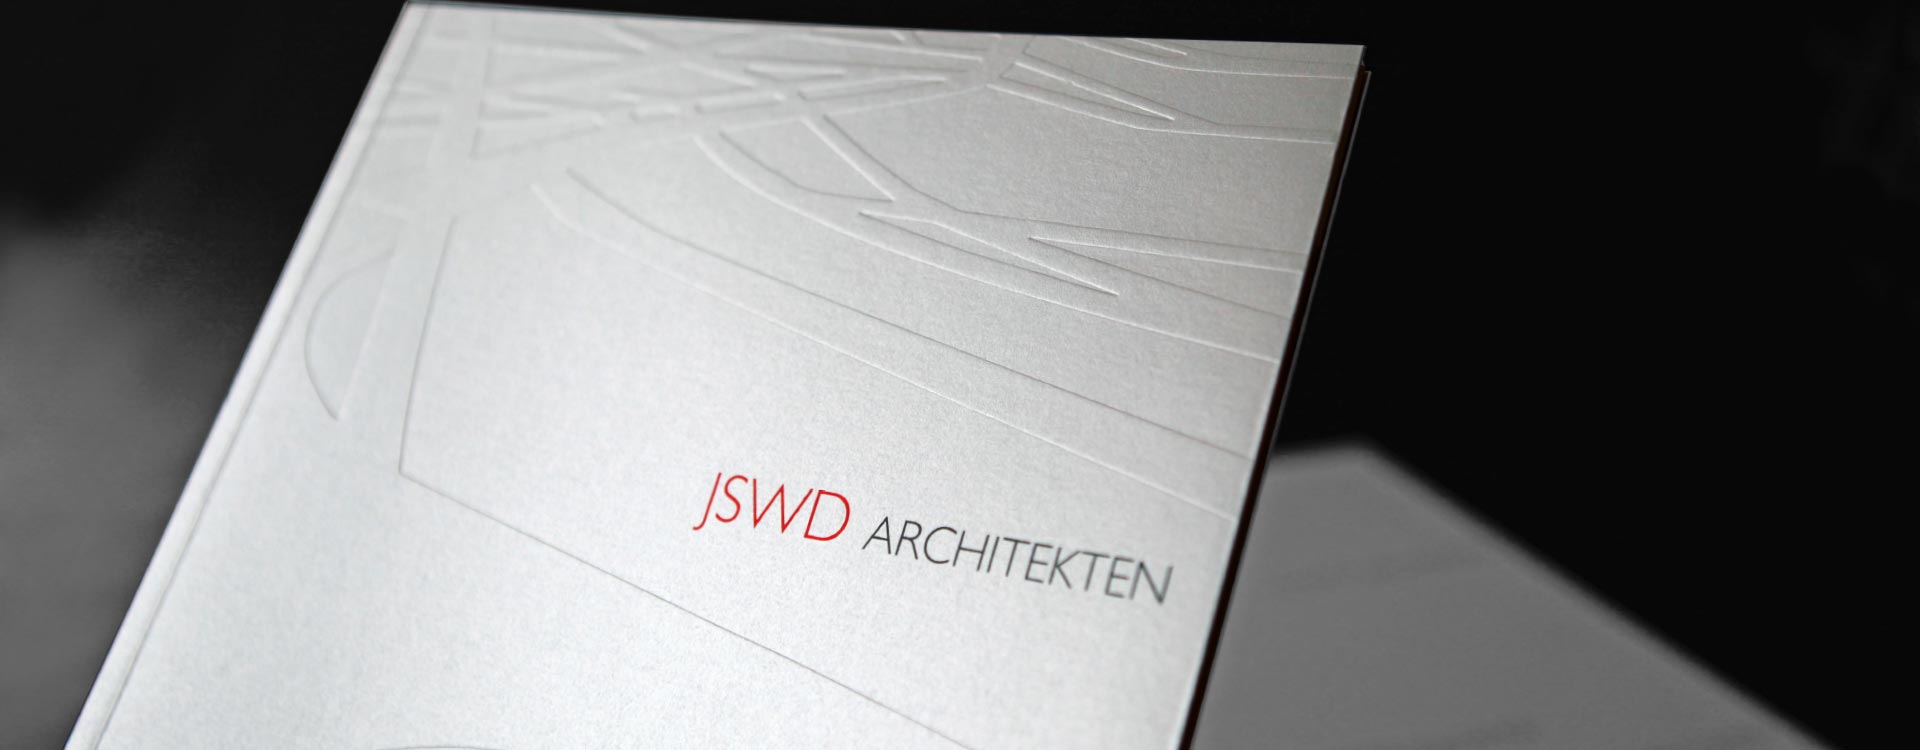 Image brochure for JSWD Architekten, Köln, with embossed envelope; Design: Kattrin Richter | Graphic Design Studio